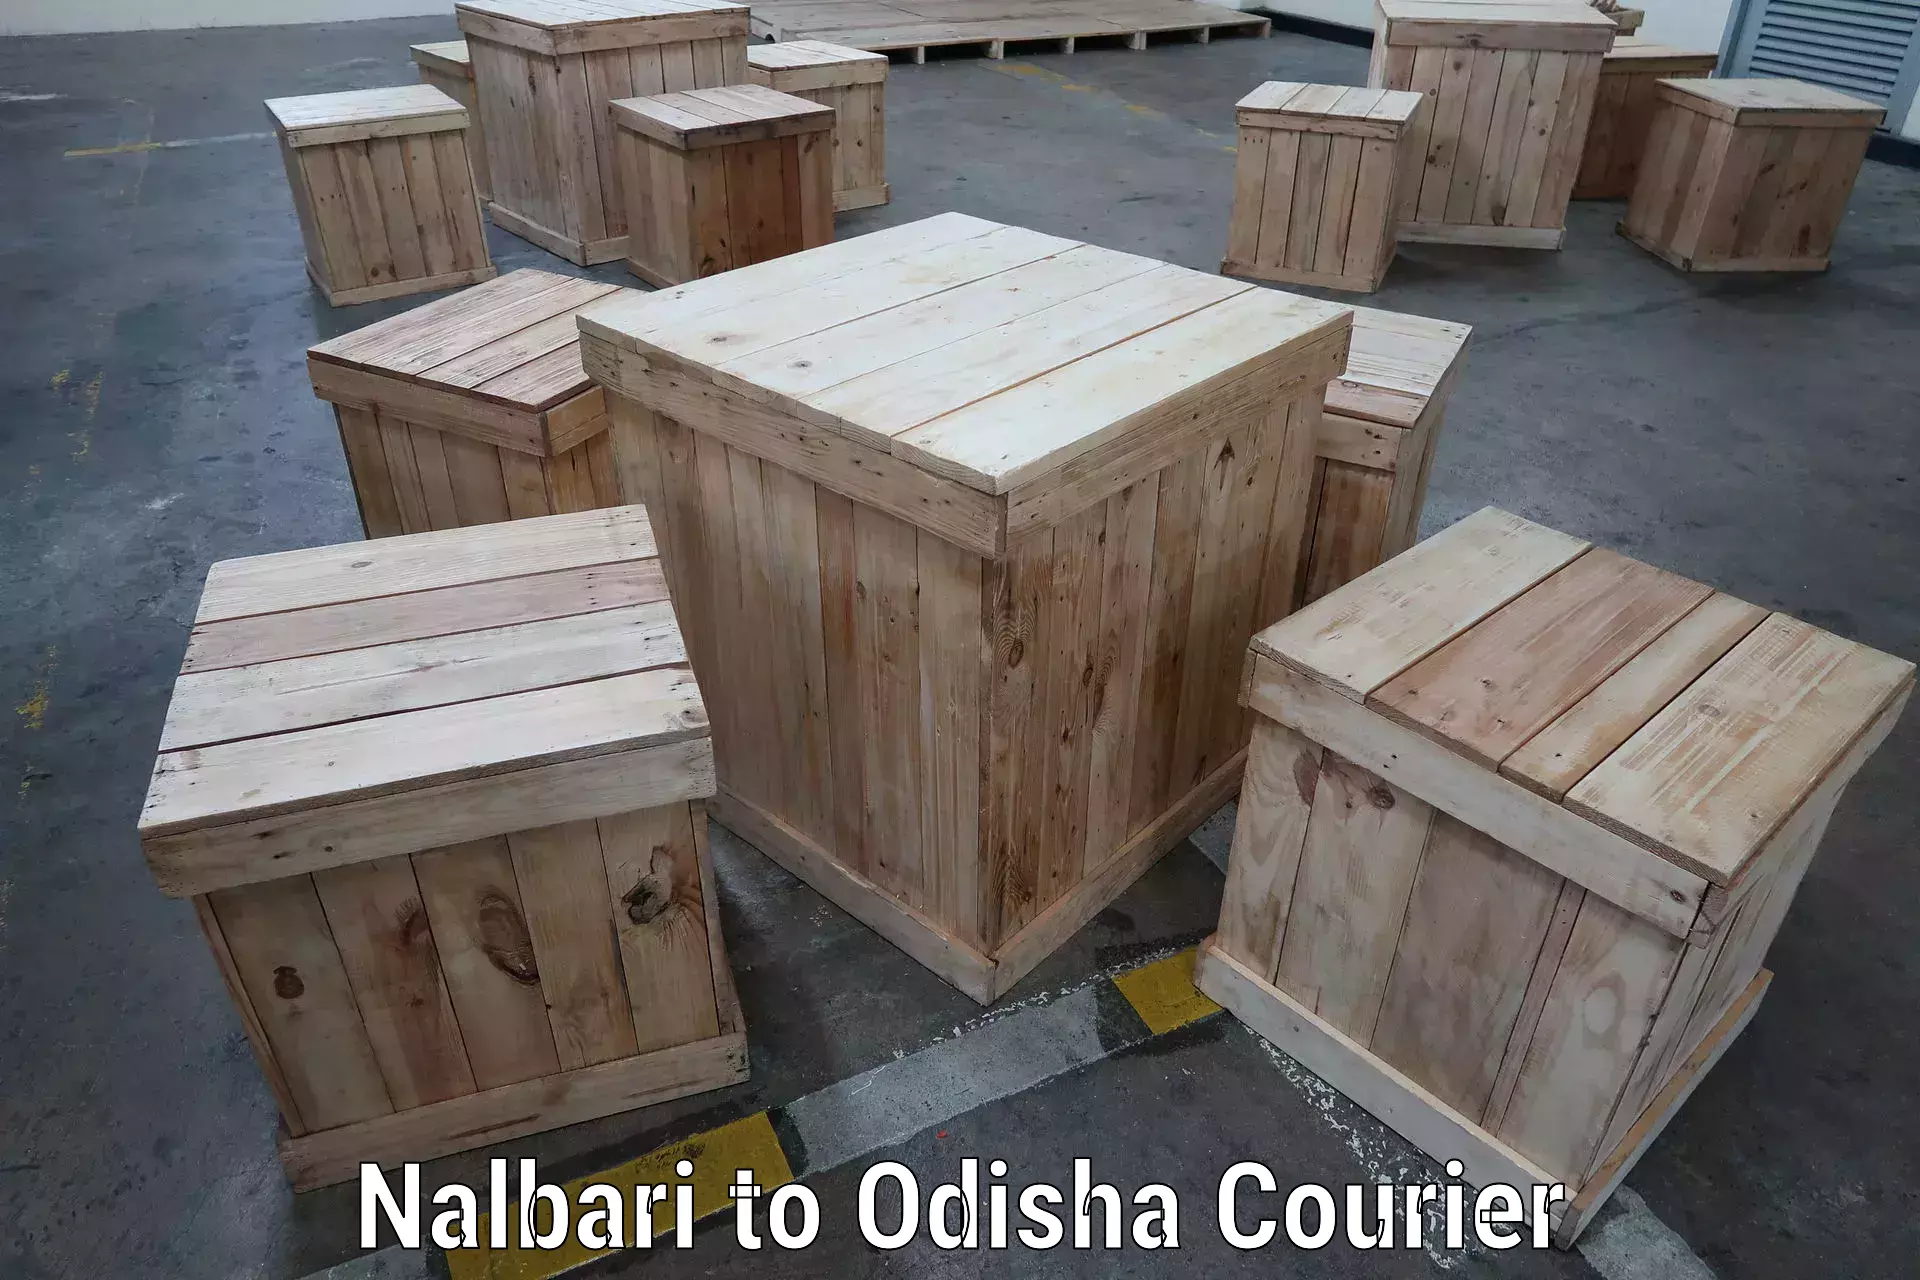 Courier service comparison Nalbari to Chandipur